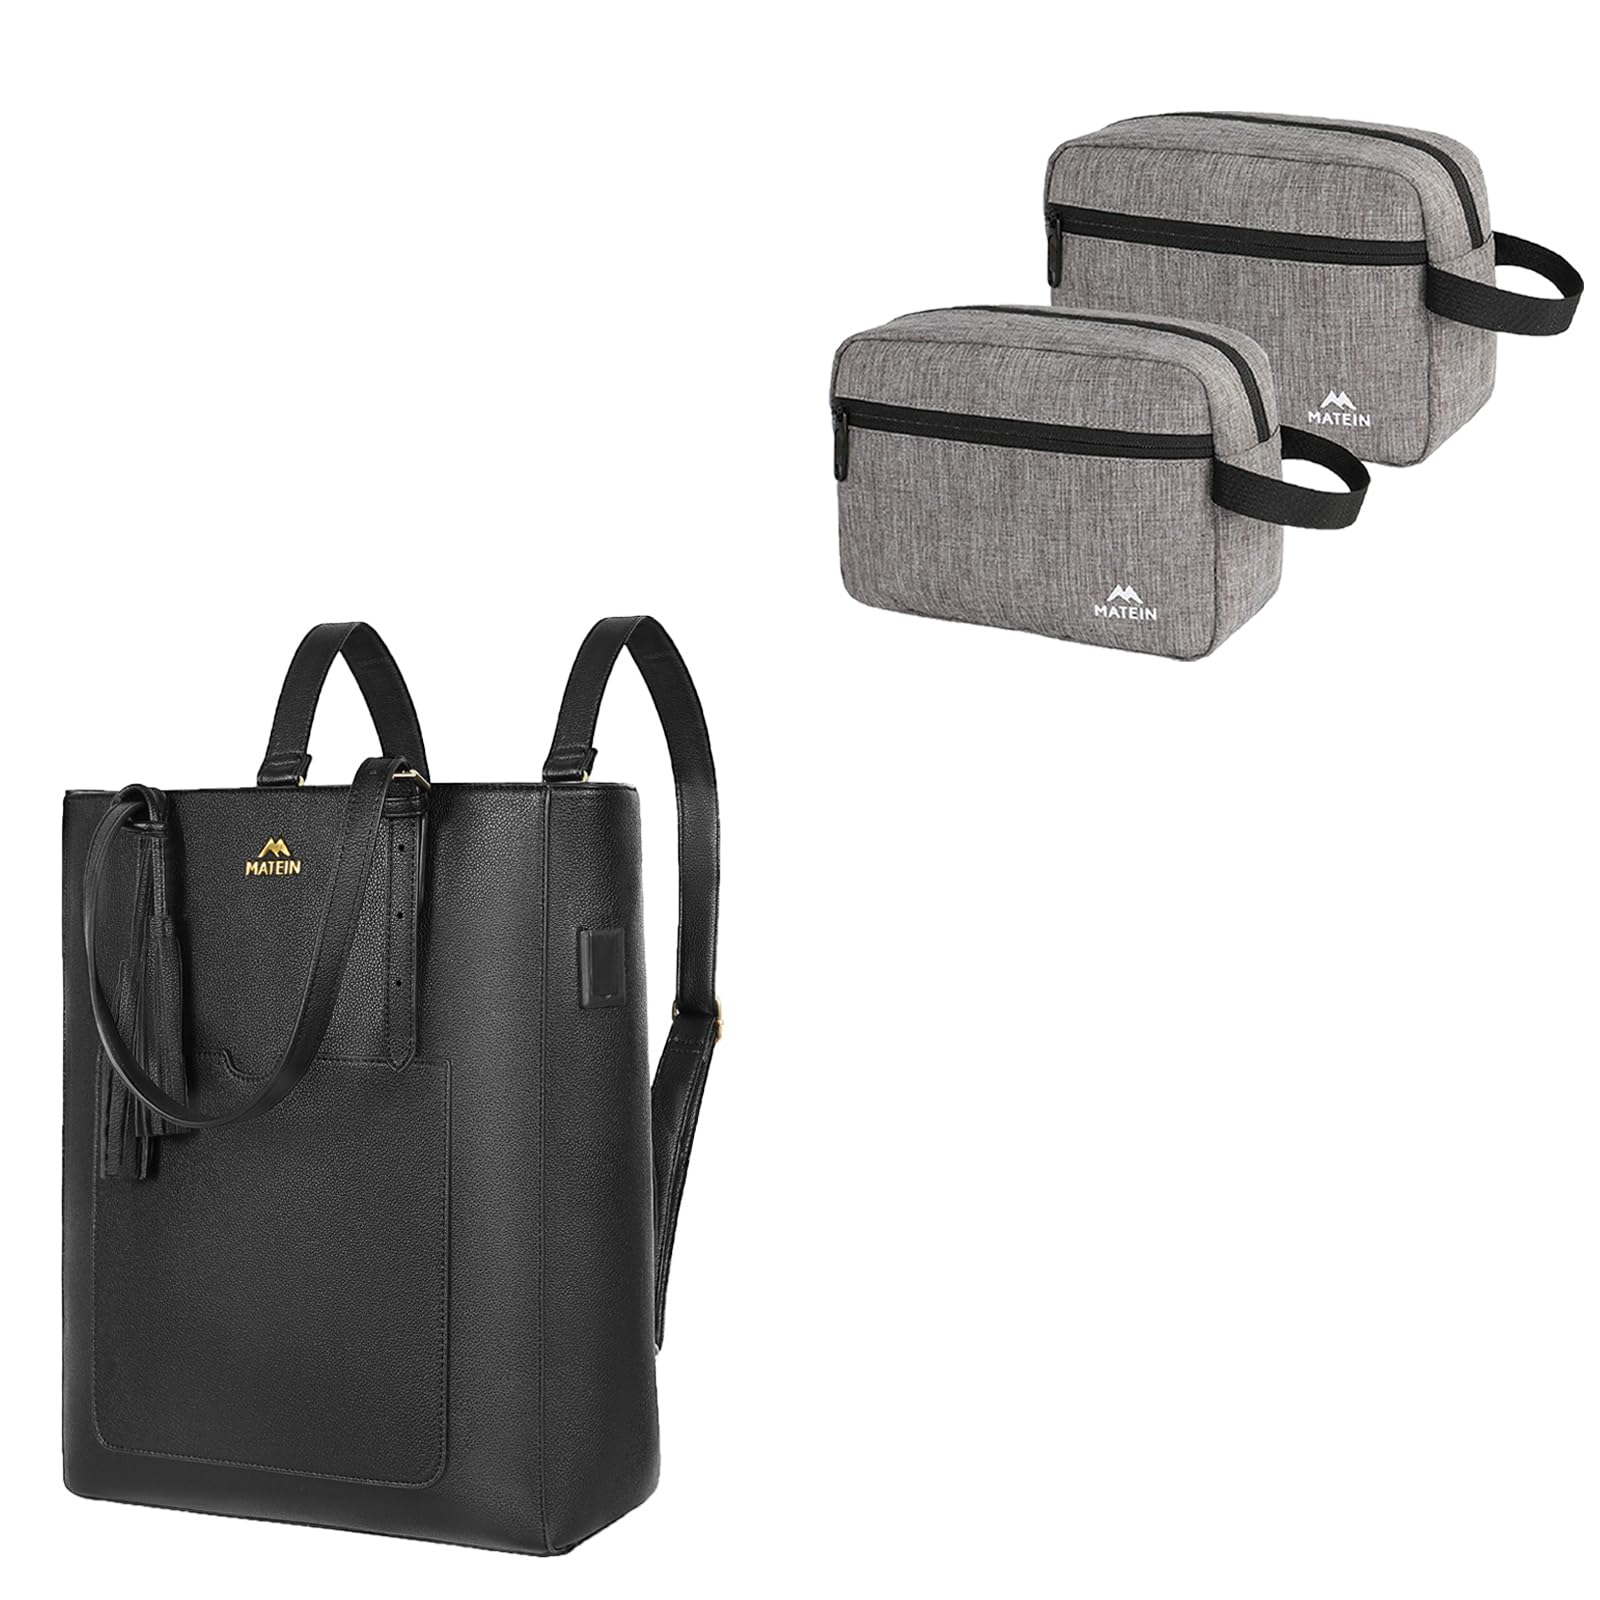 MATEIN Leather Laptop Backpack, 15.6 Inch Waterproof Convertible Backpack Purse for Women, Toiletry Bag for Men (2 Packs), Waterproof Dopp Kit Bathroom Shaving Bag for Toiletries